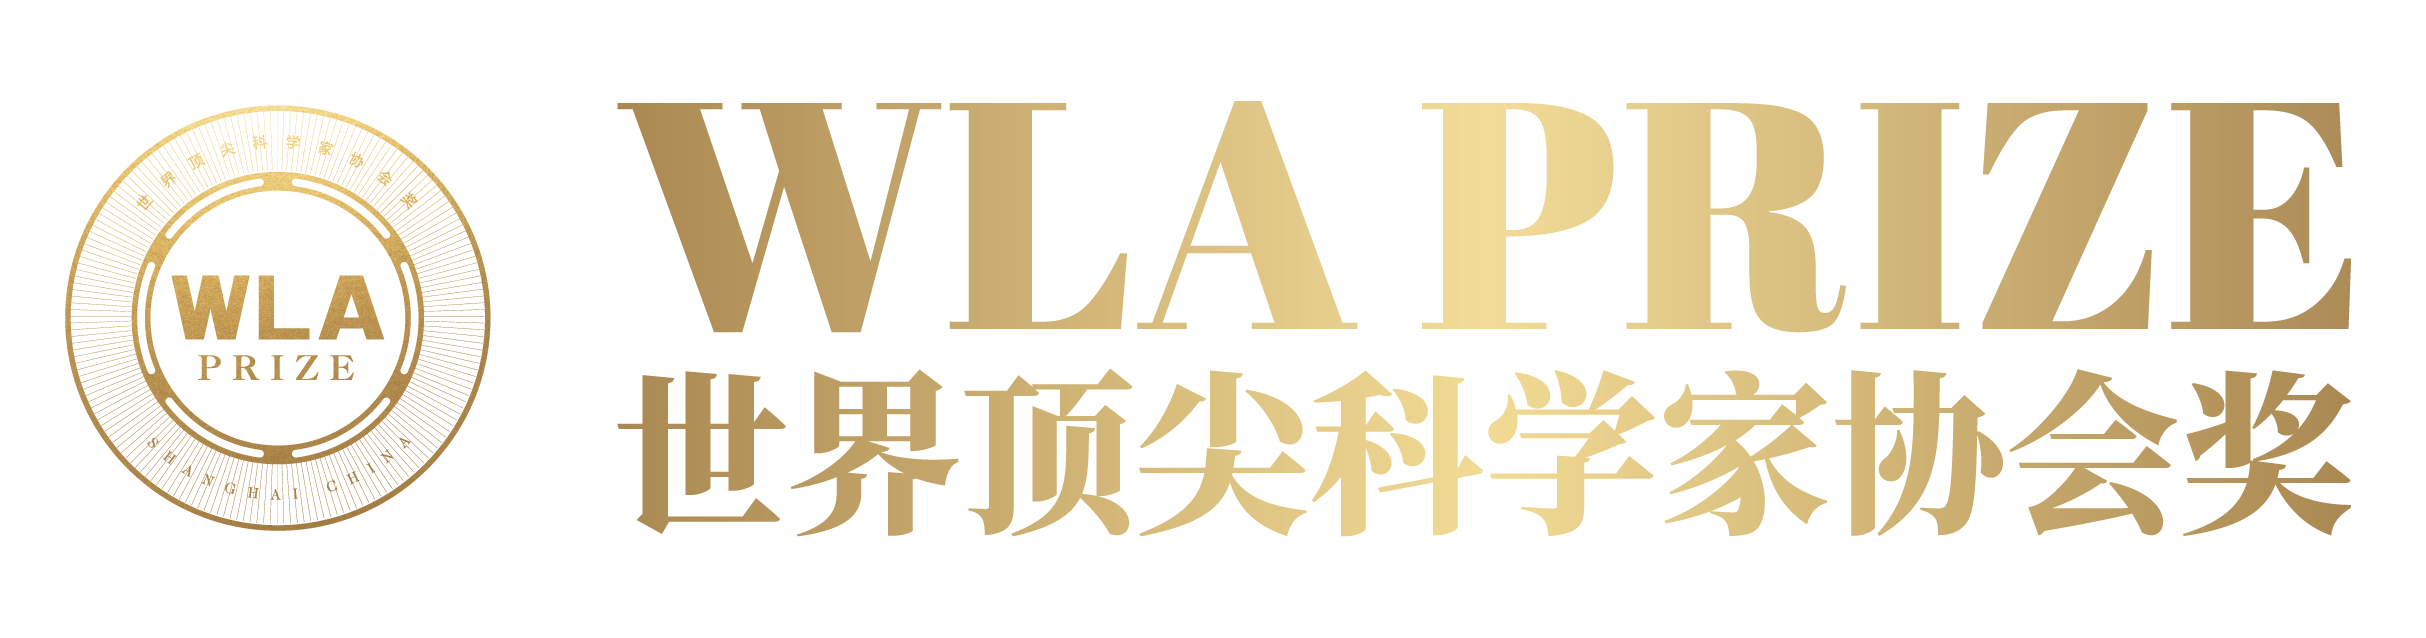 WLA PRIZE 中英 金色 logo9.15-02